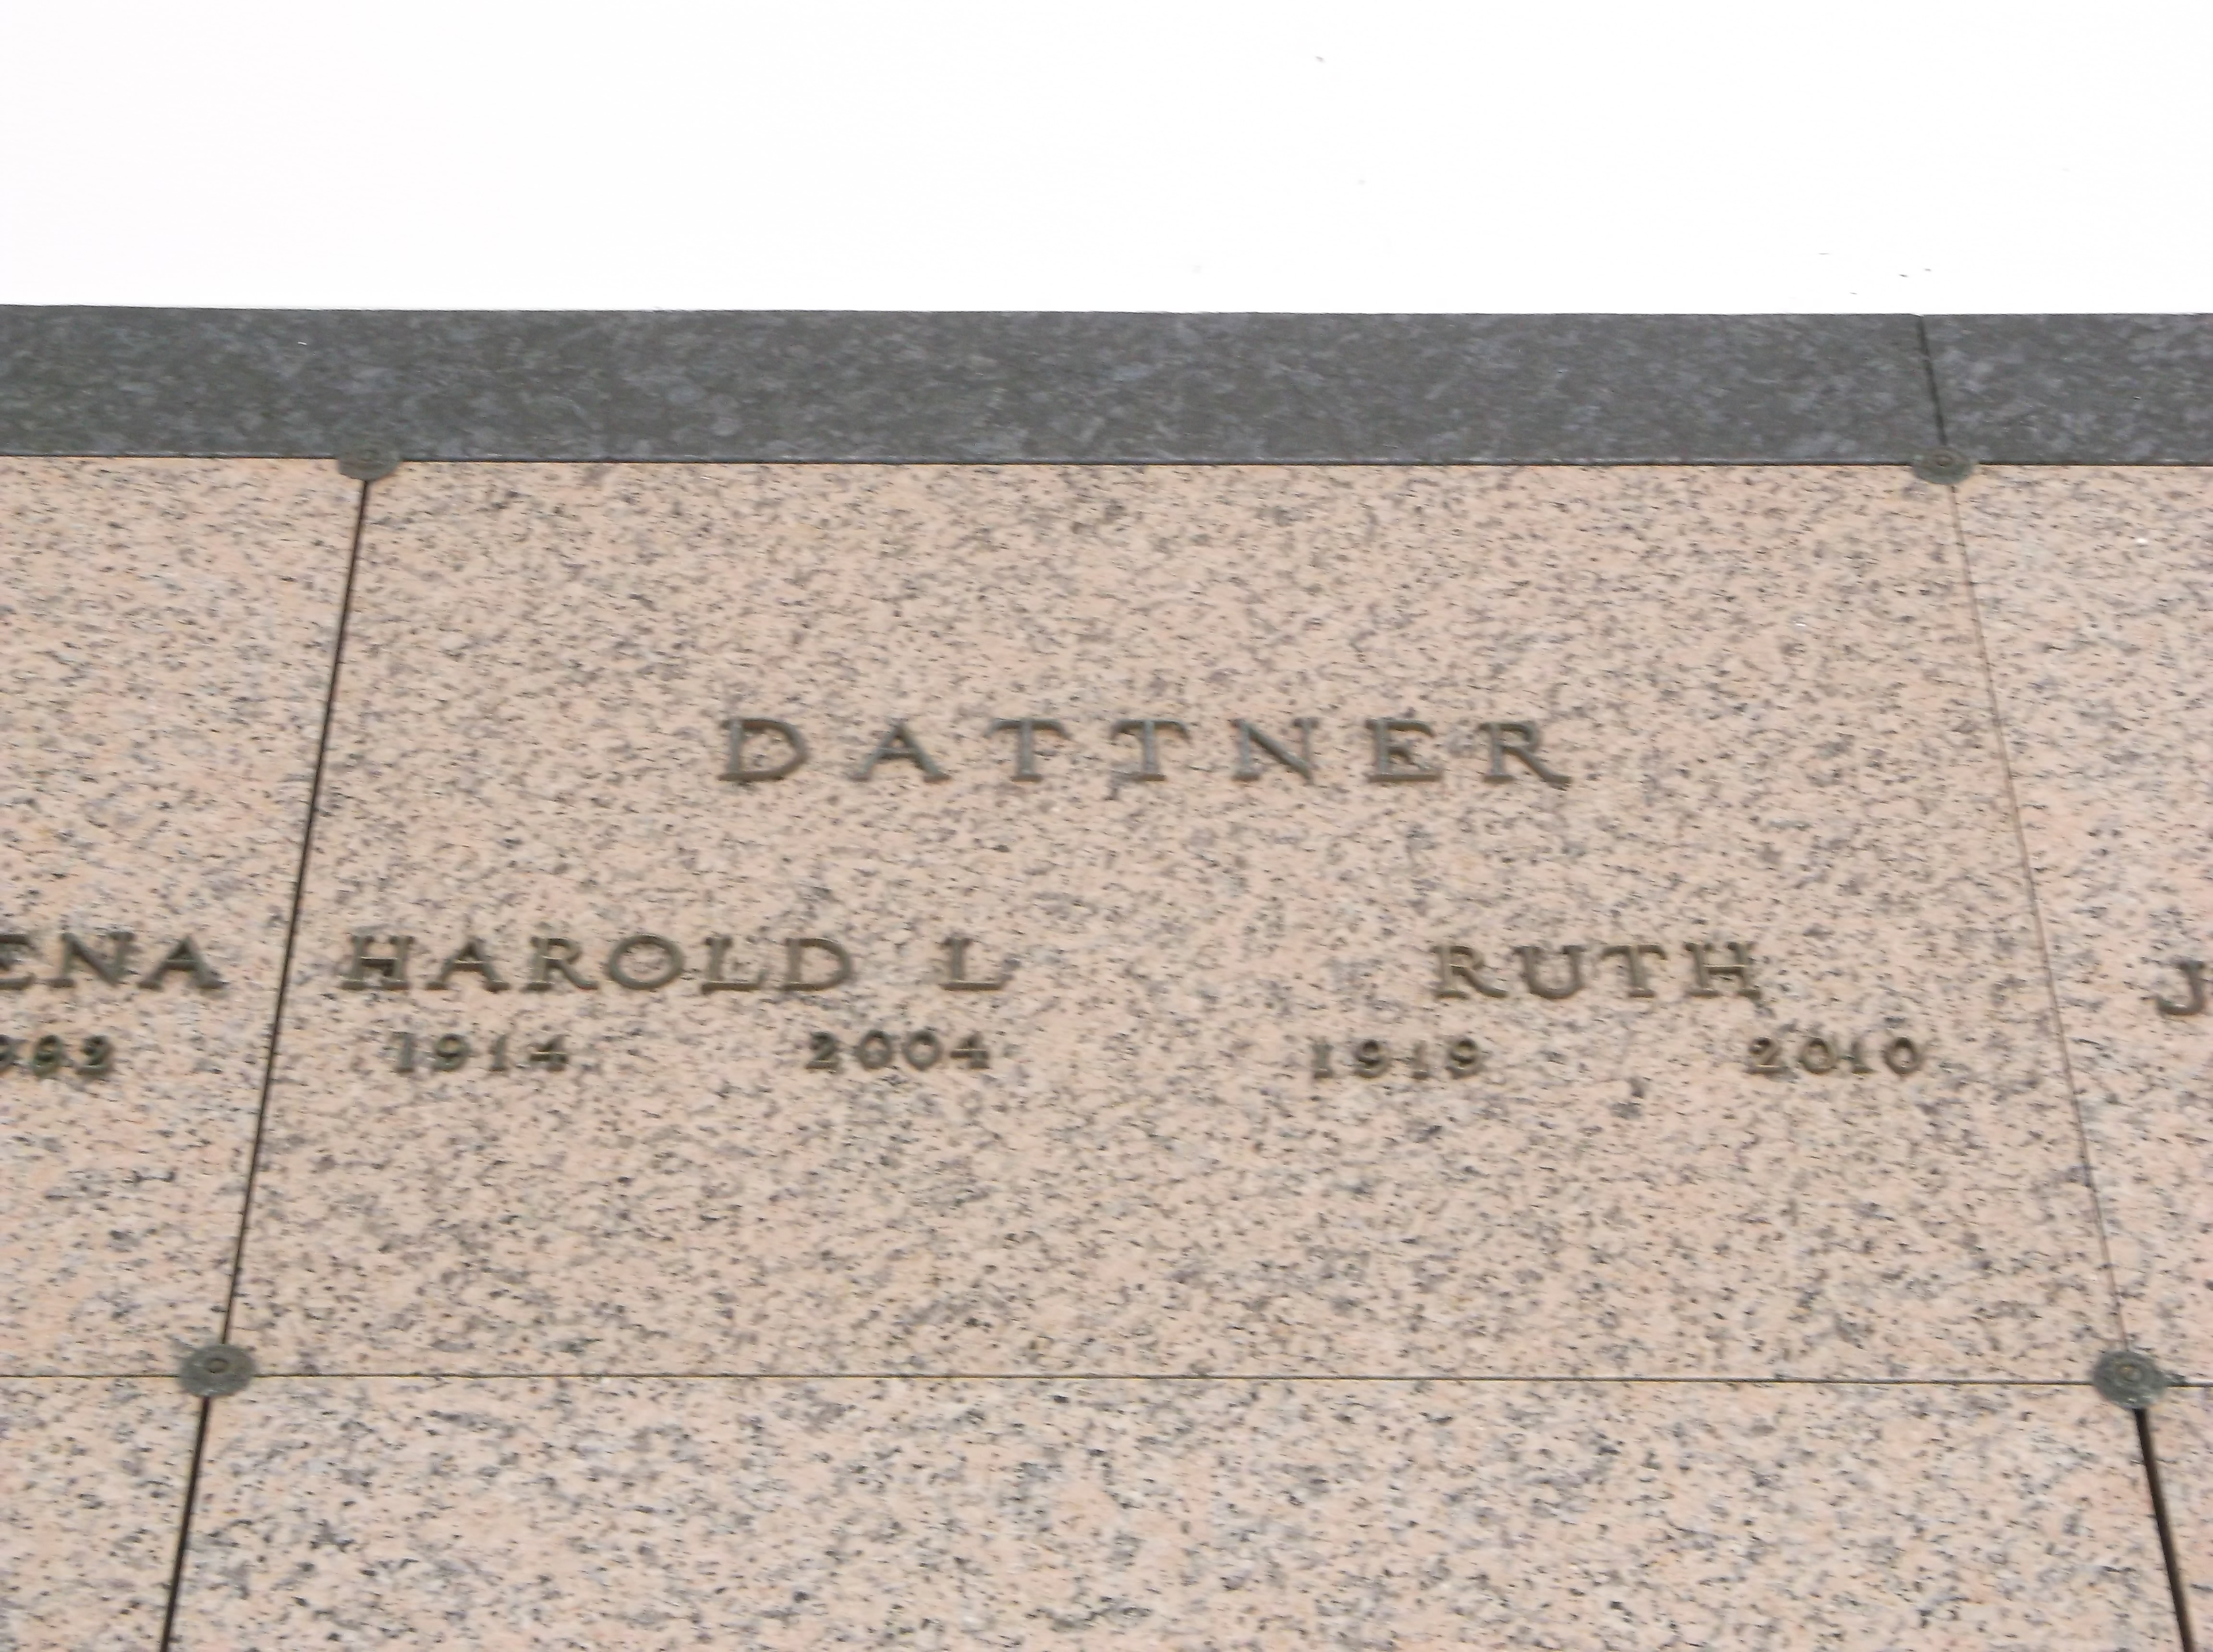 Harold L Dattner